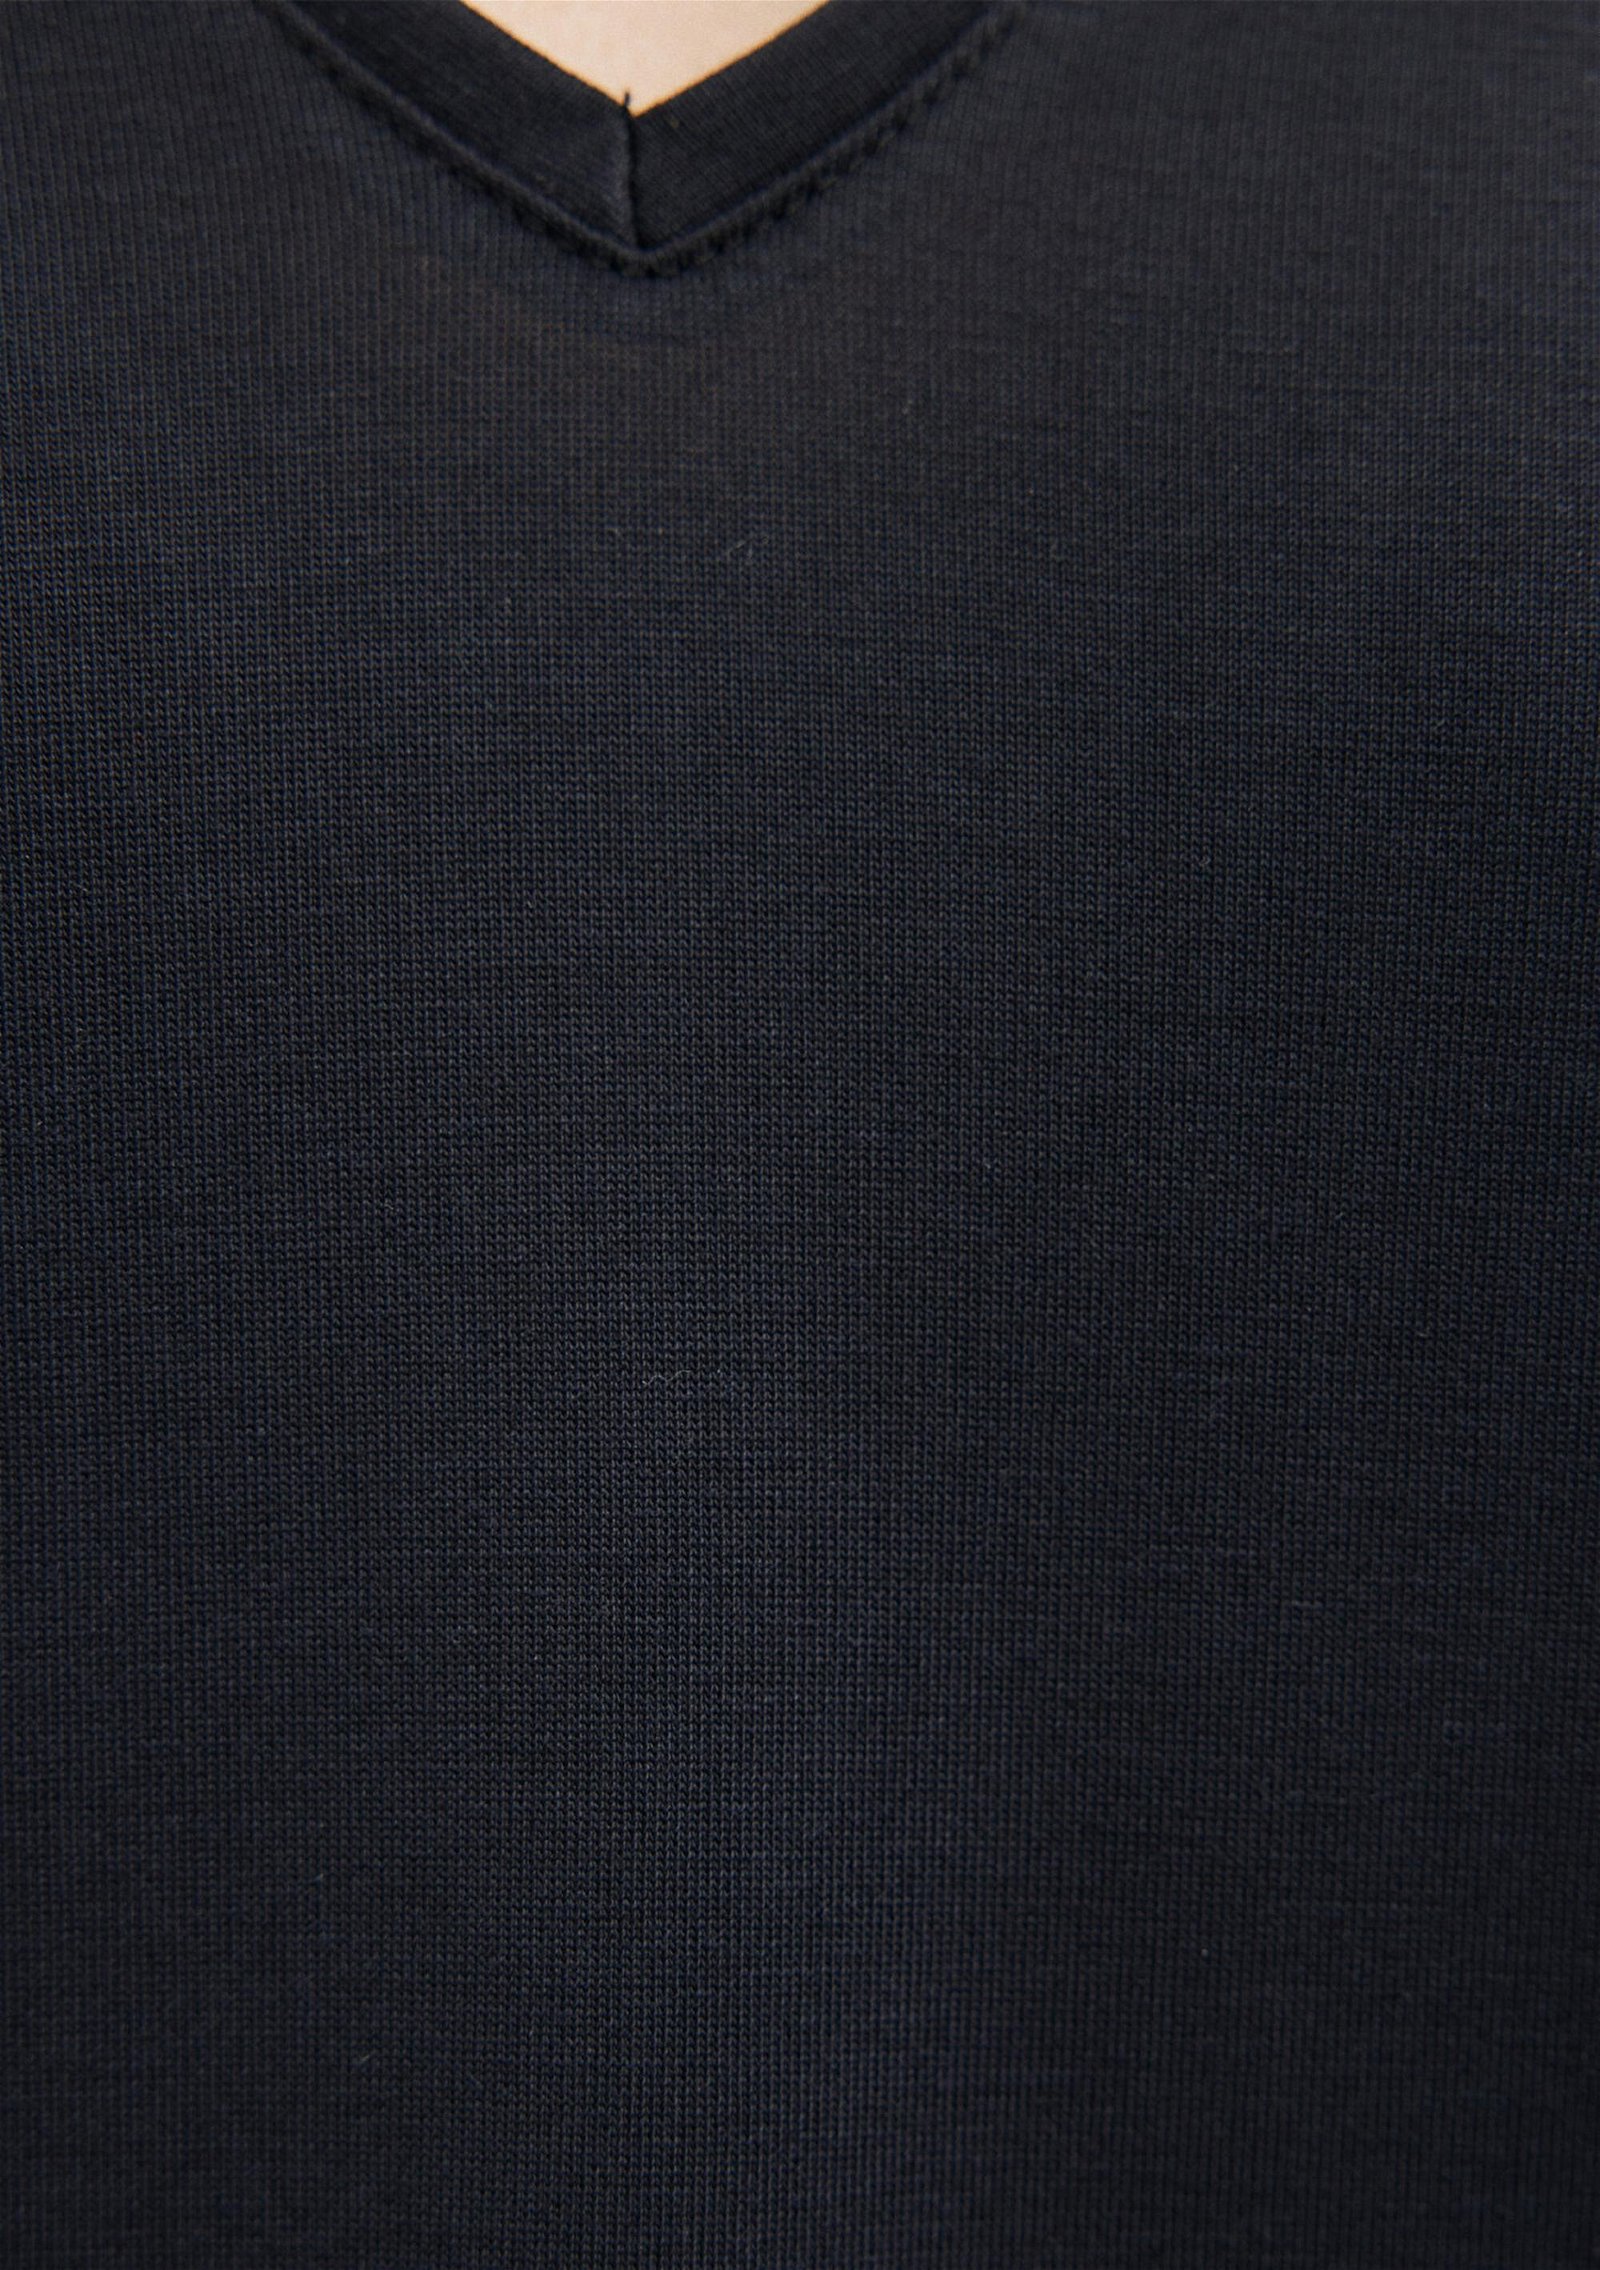 Mavi Siyah Kolsuz Tişört Regular Fit / Normal Kesim 1612252-900